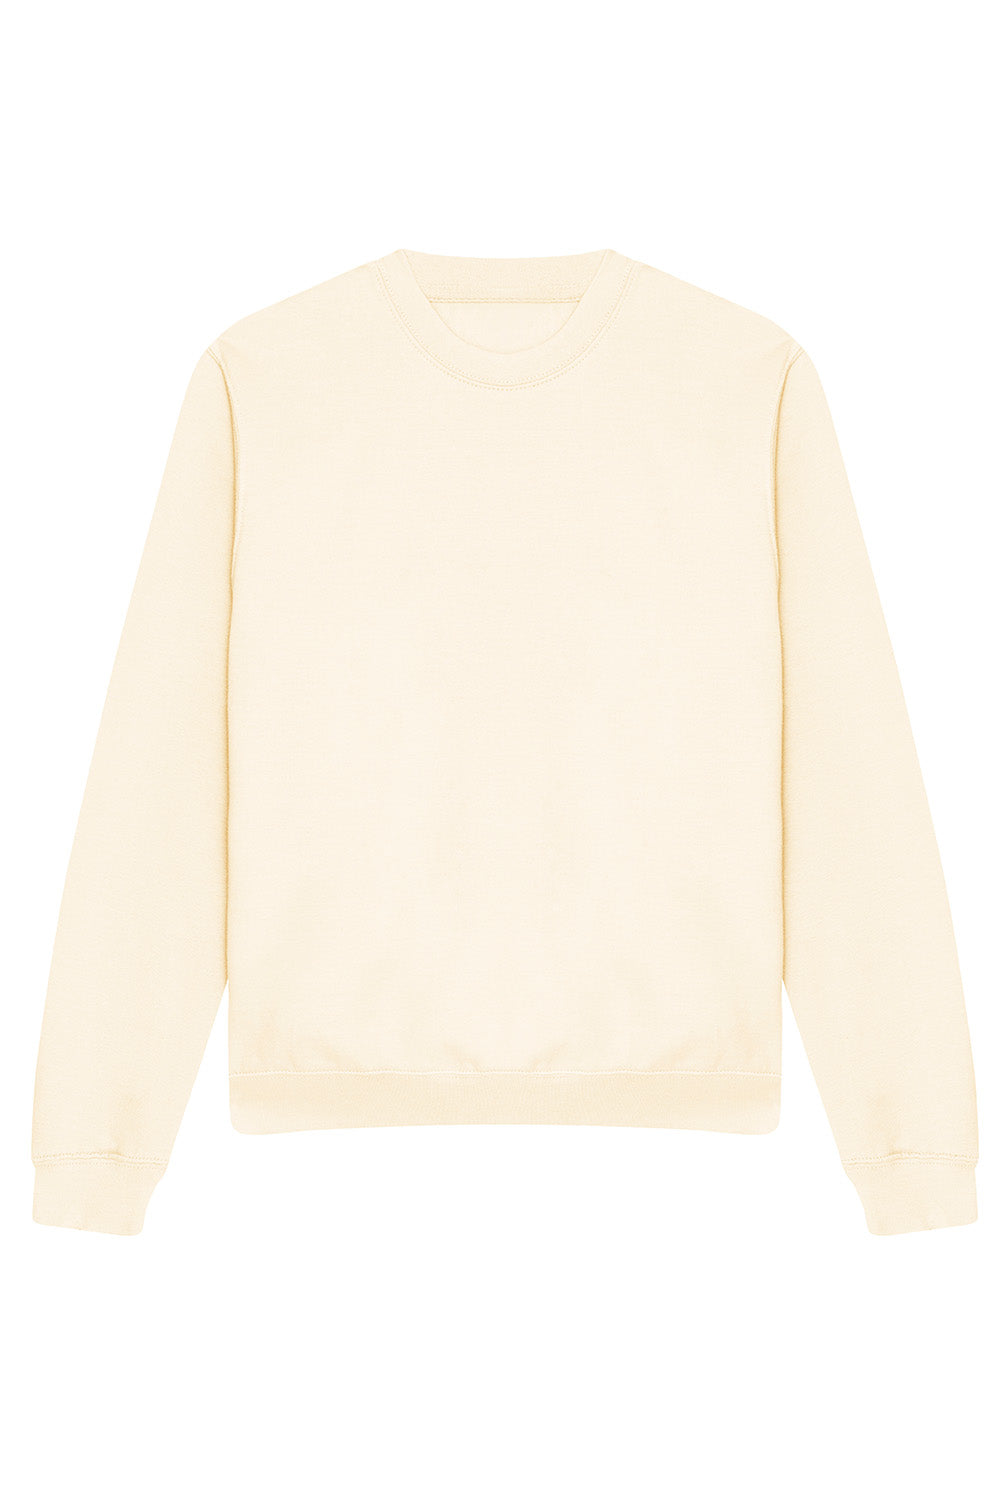 Stay Western Sweatshirt In Vanilla (Custom Pack)